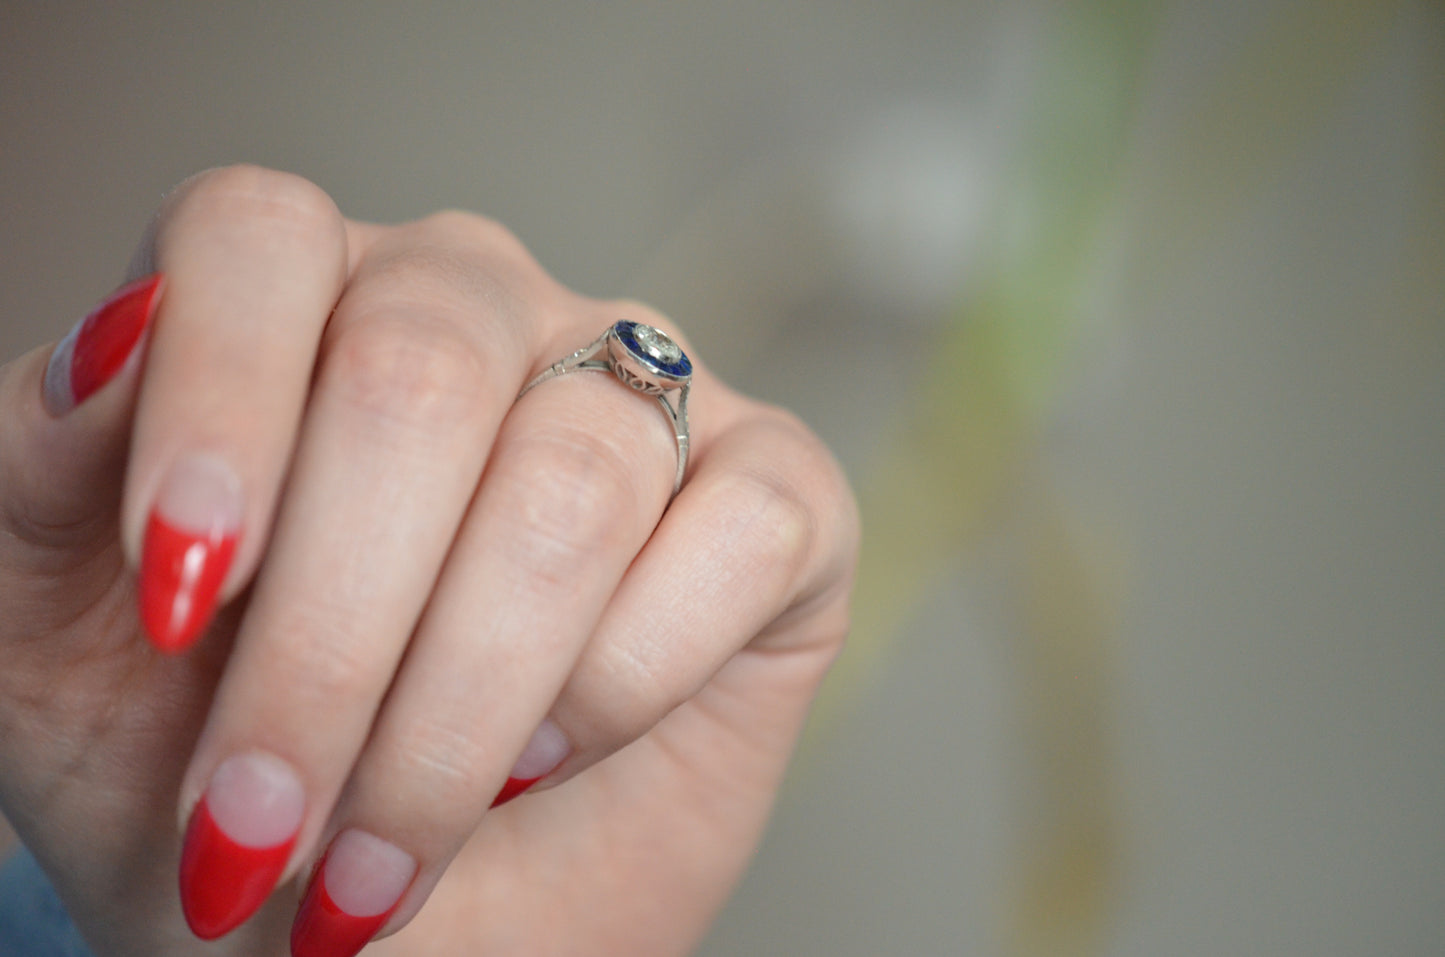 Stunning Art Deco Style Sapphire and Diamond Target Ring